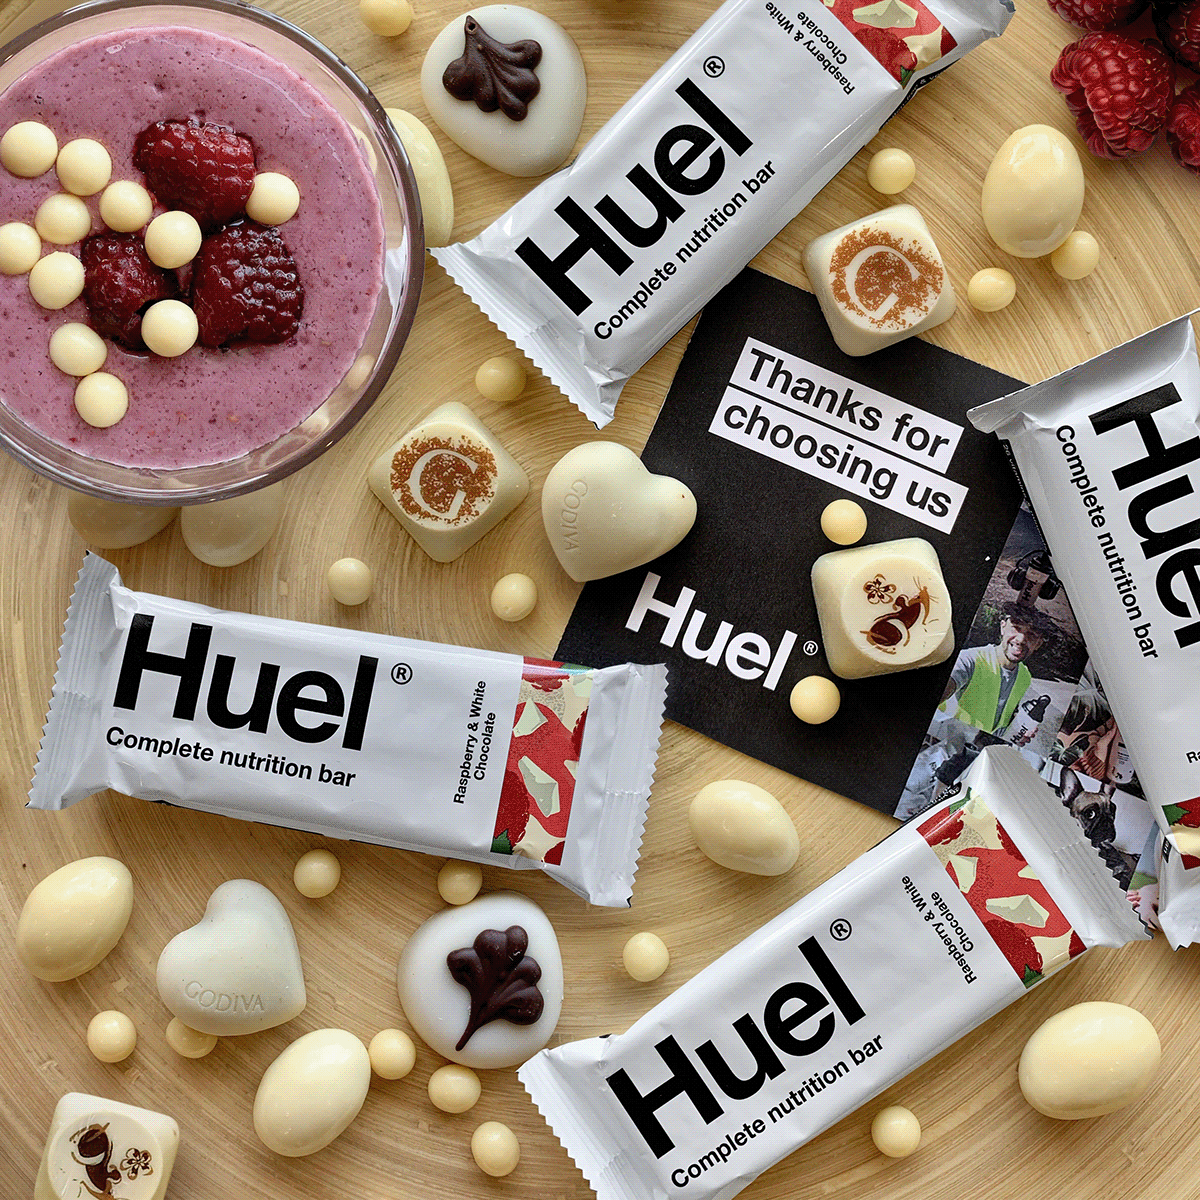 Huel social media posts as Brand Ambassador - all created using iPhone photography.